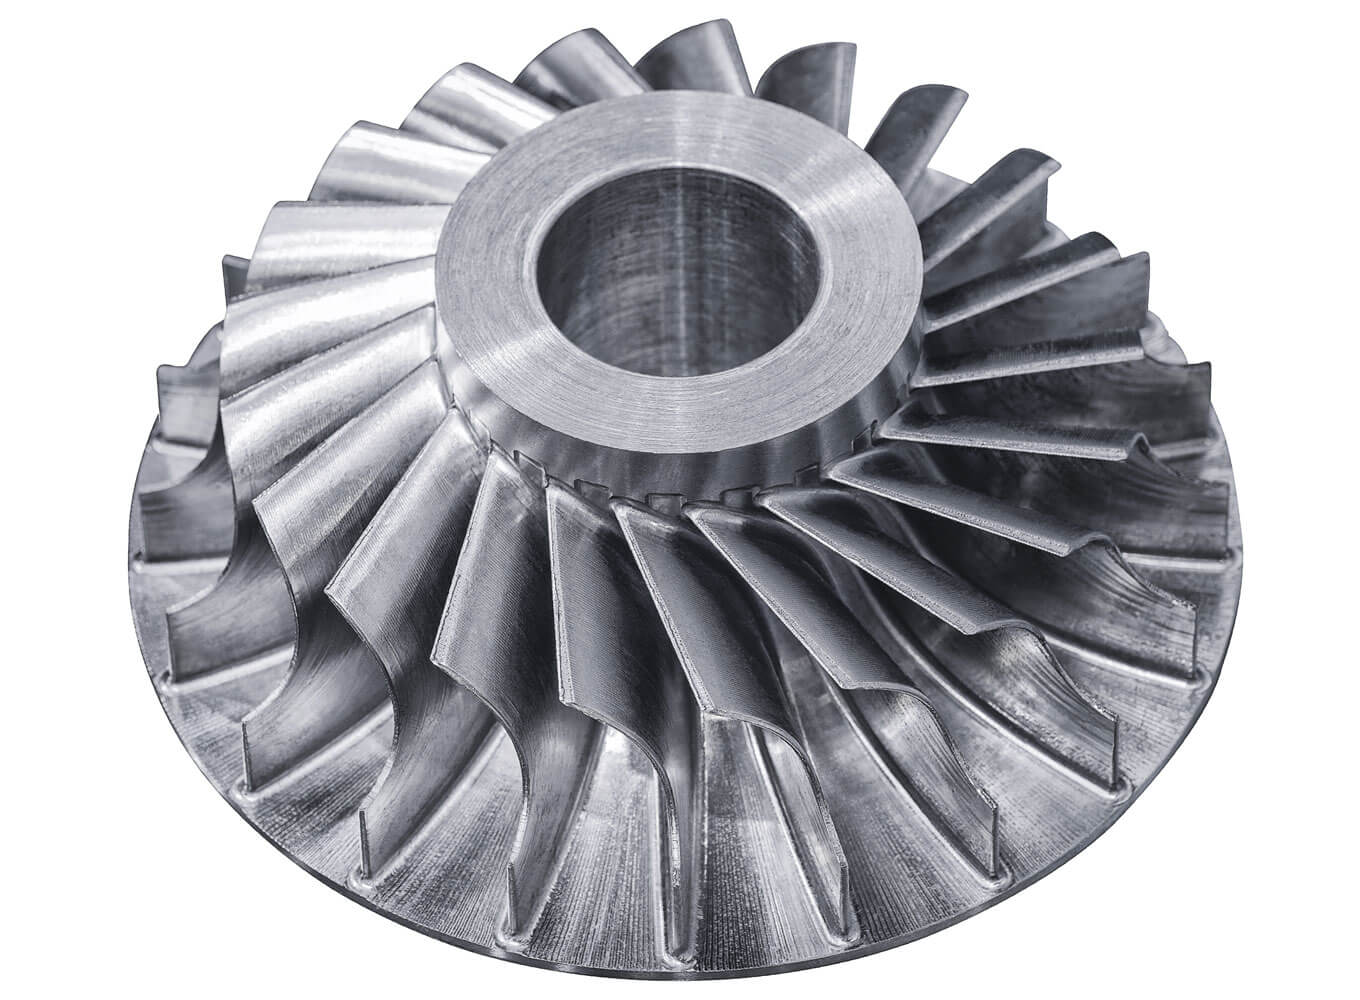 1360x1000-aeropower-turbine-966514152